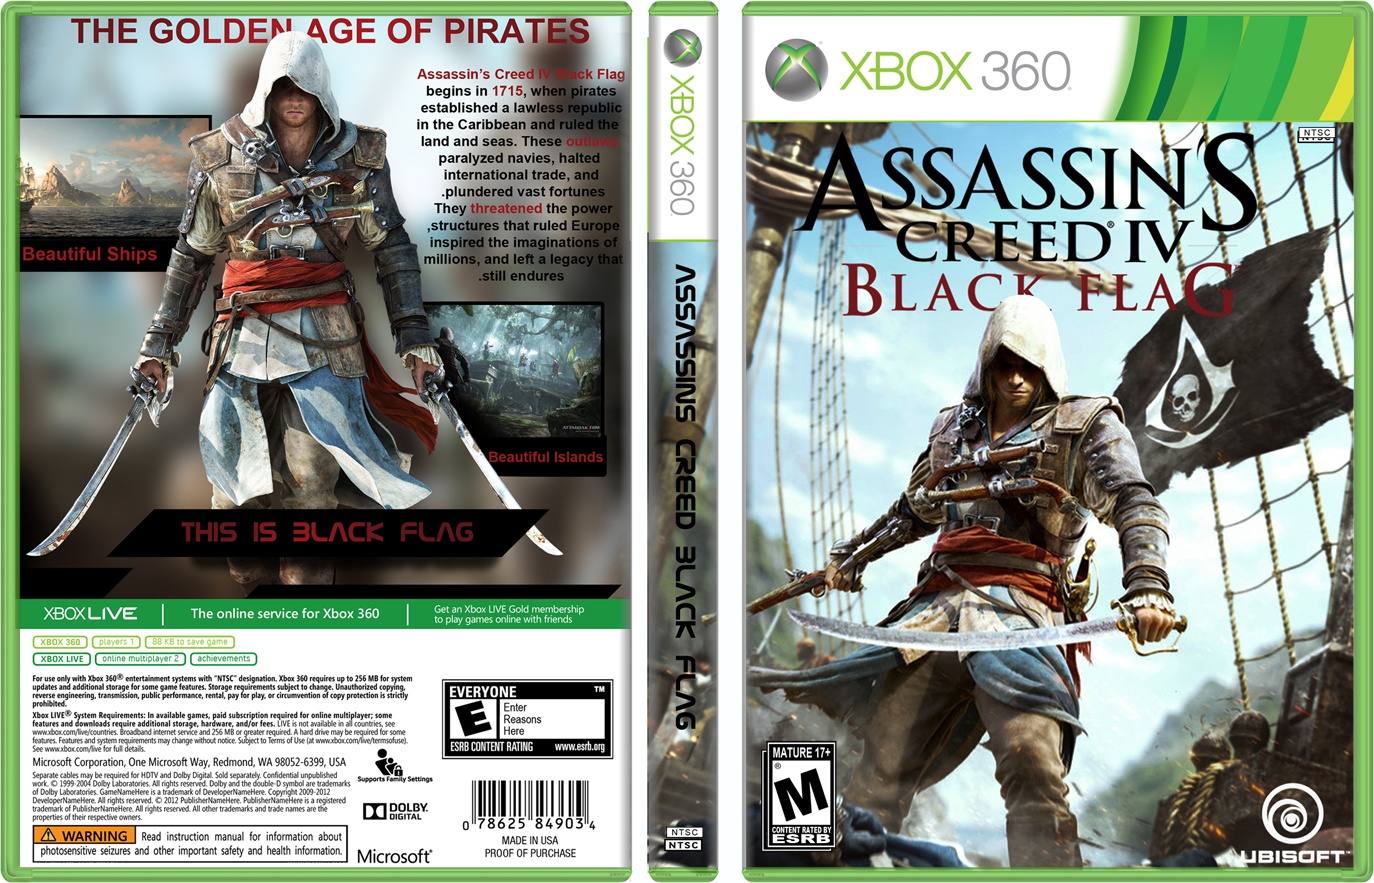 Assassins игра xbox. Assassins.Creed.IV.Black.Flag Xbox 360. Ассасин Крид 4 на Xbox 360. Assassins Creed 4 Black Flag Xbox 360. Assassins Creed Xbox 360 коробка.